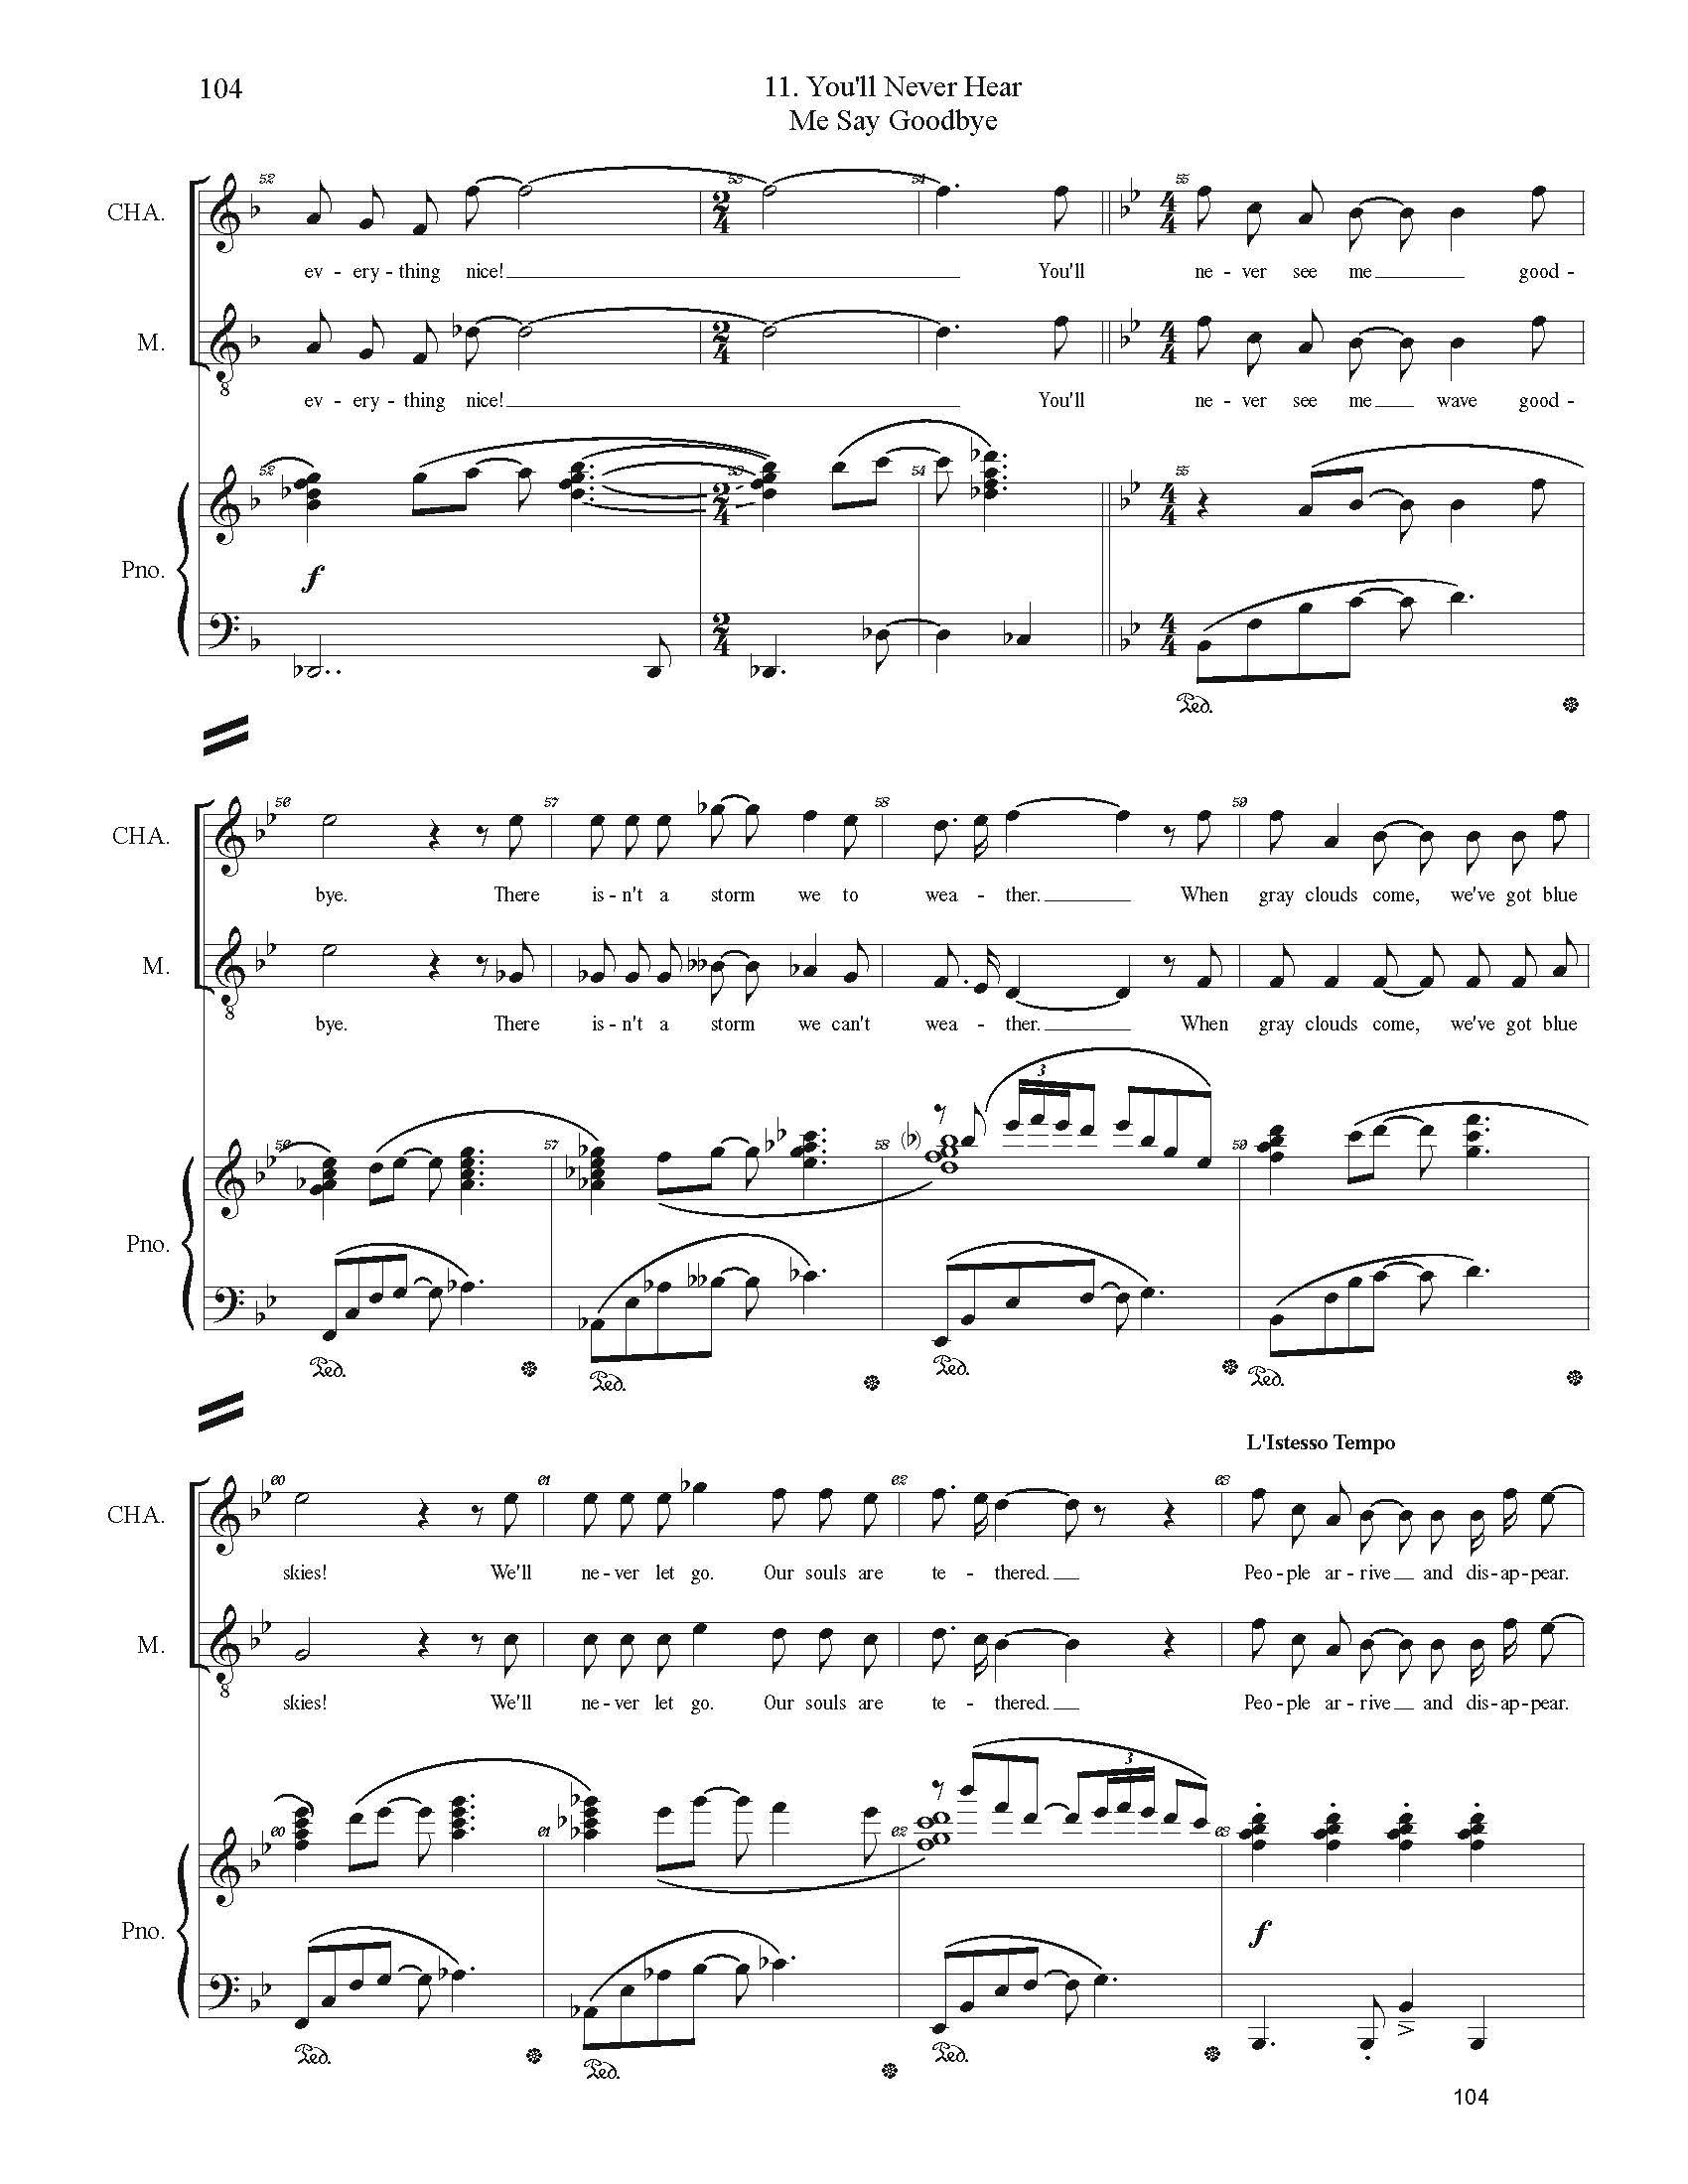 FULL PIANO VOCAL SCORE DRAFT 1 - Score_Page_104.jpg